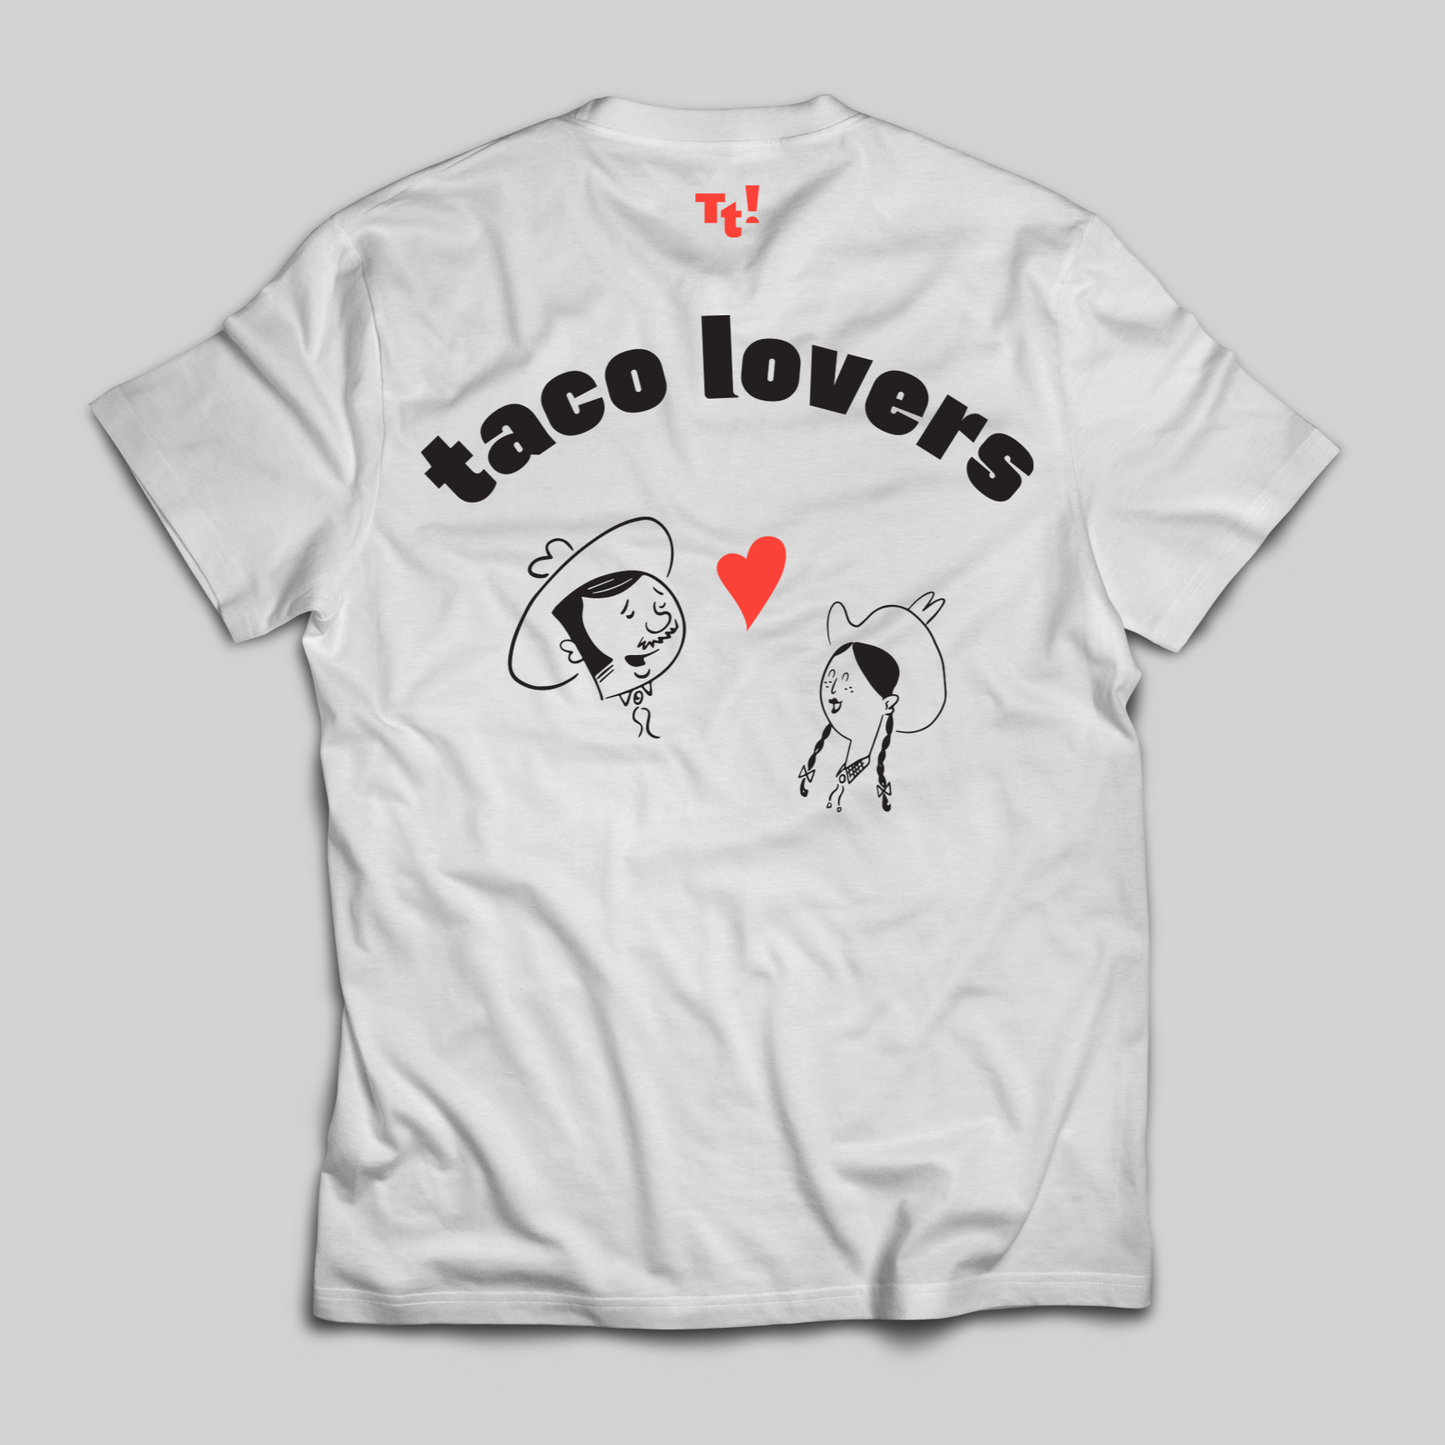 Taco Lovers Tacotote T-Shirt